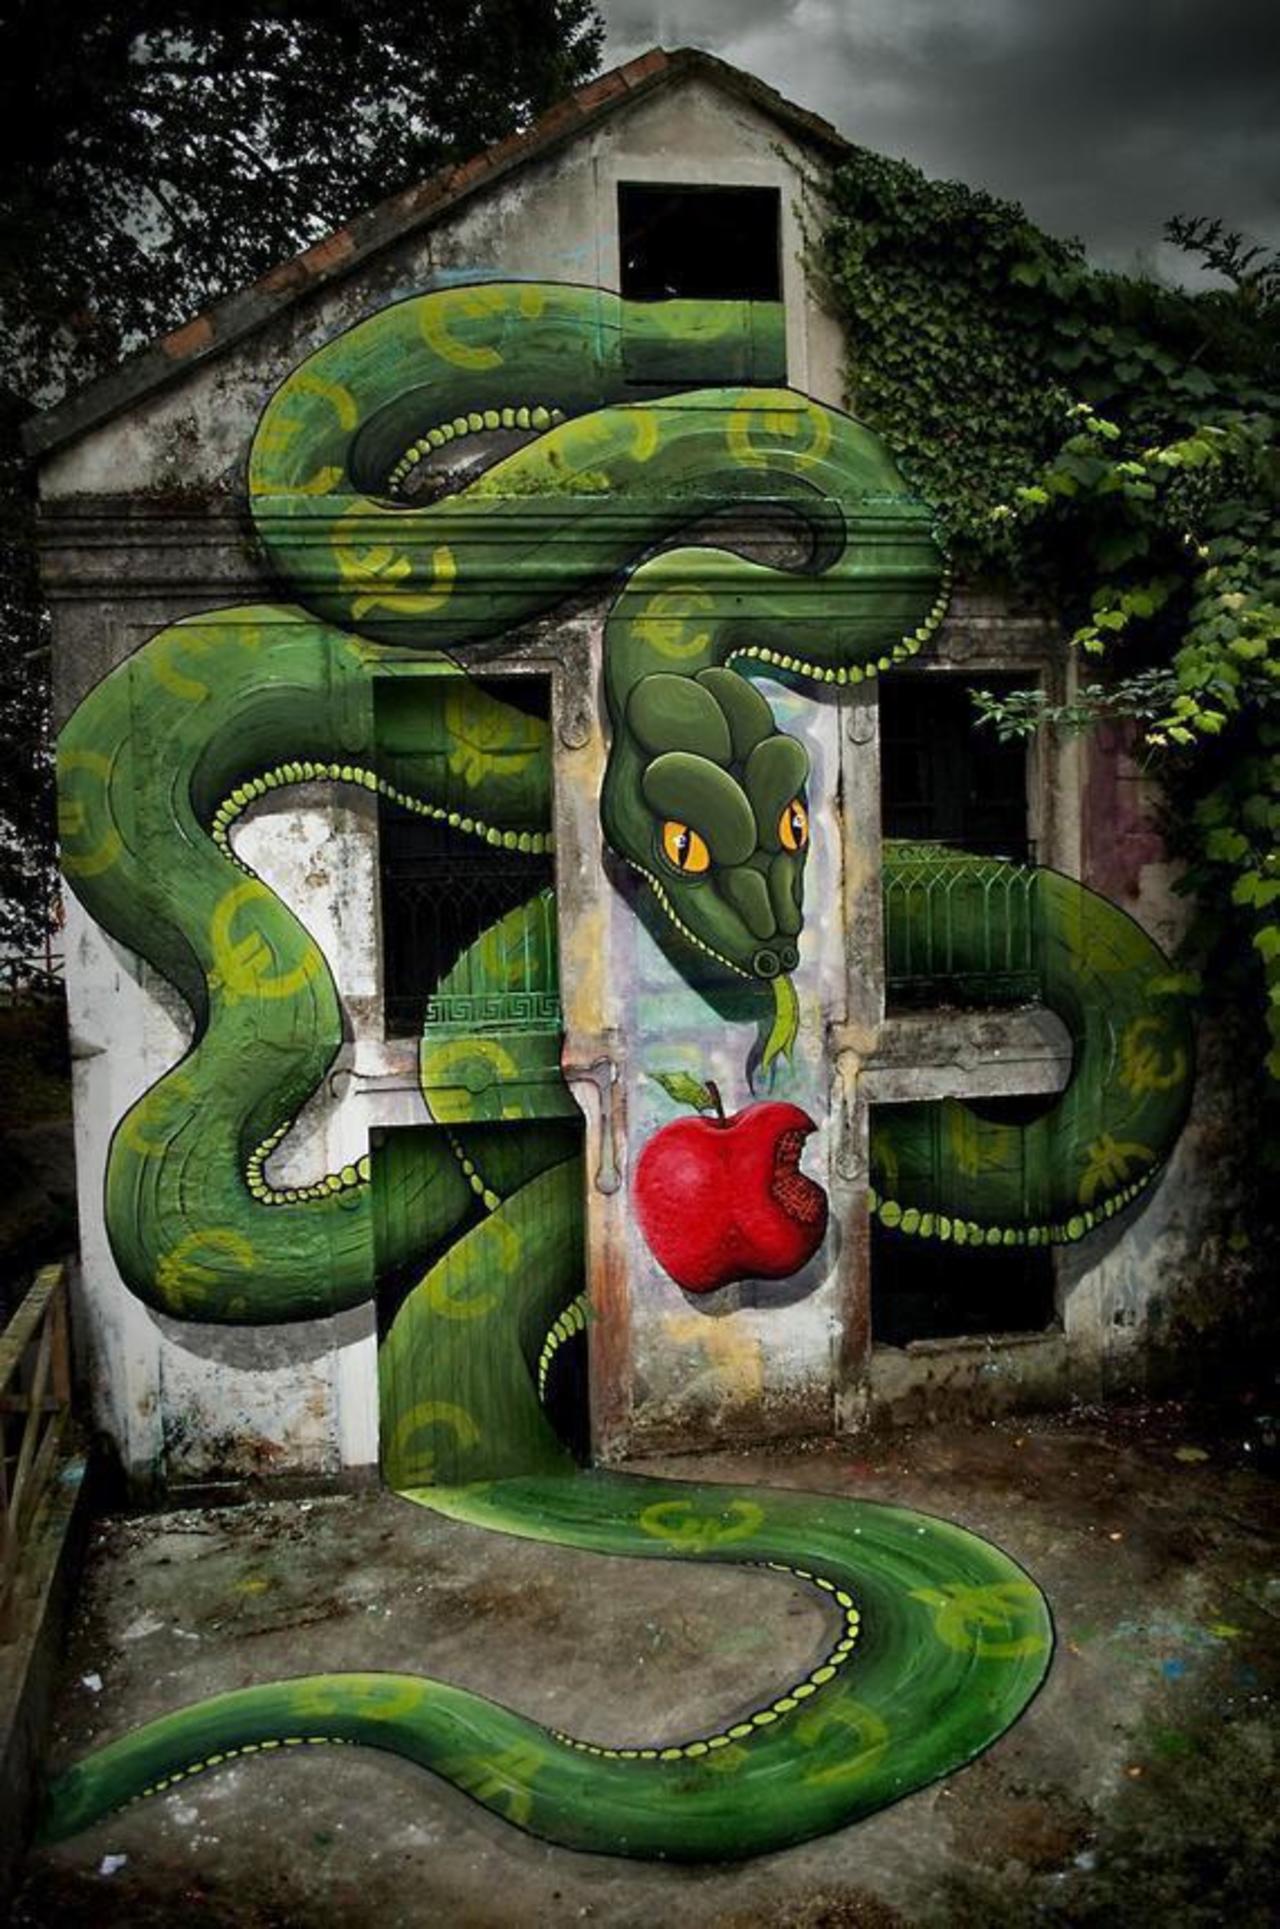 #streetart in #spain #switch #graffiti #bedifferent #python #snake #arte #art http://t.co/XT096nfLCX